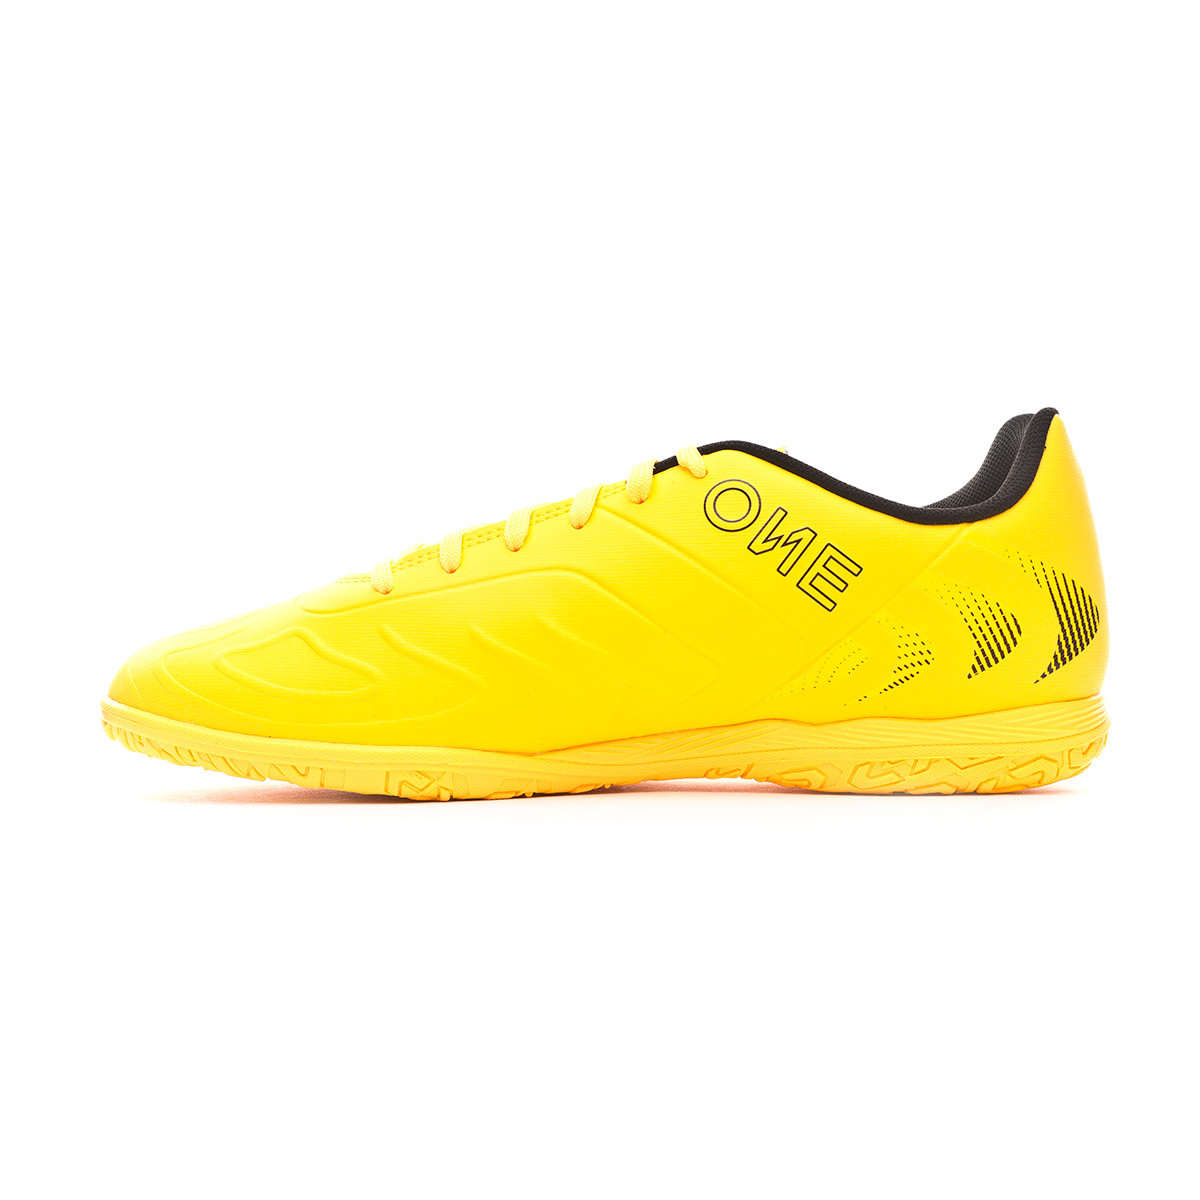 puma shoes yellow